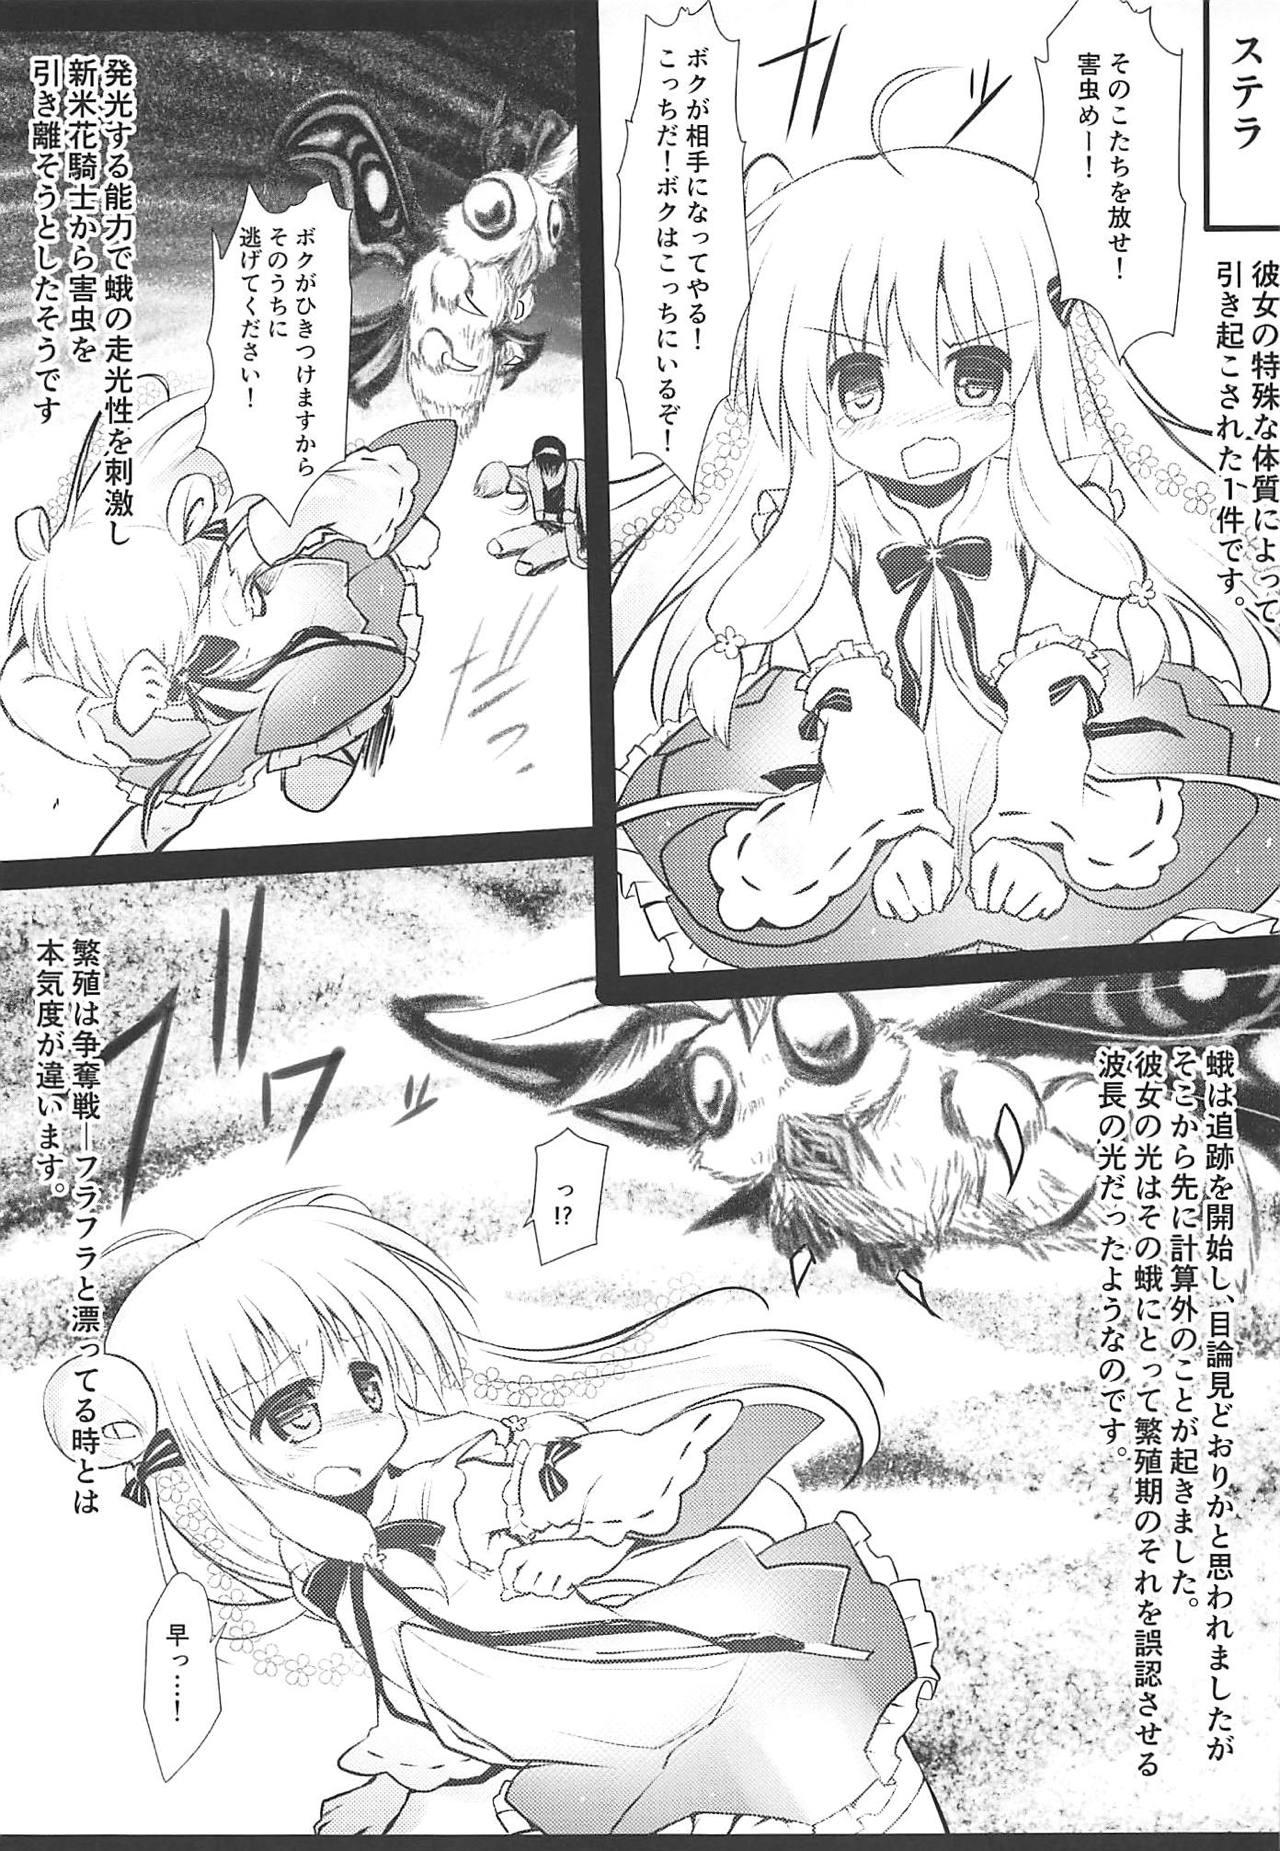 Affair Gaichuu Higai Houkokusho File 3 - Flower knight girl Realitykings - Page 4